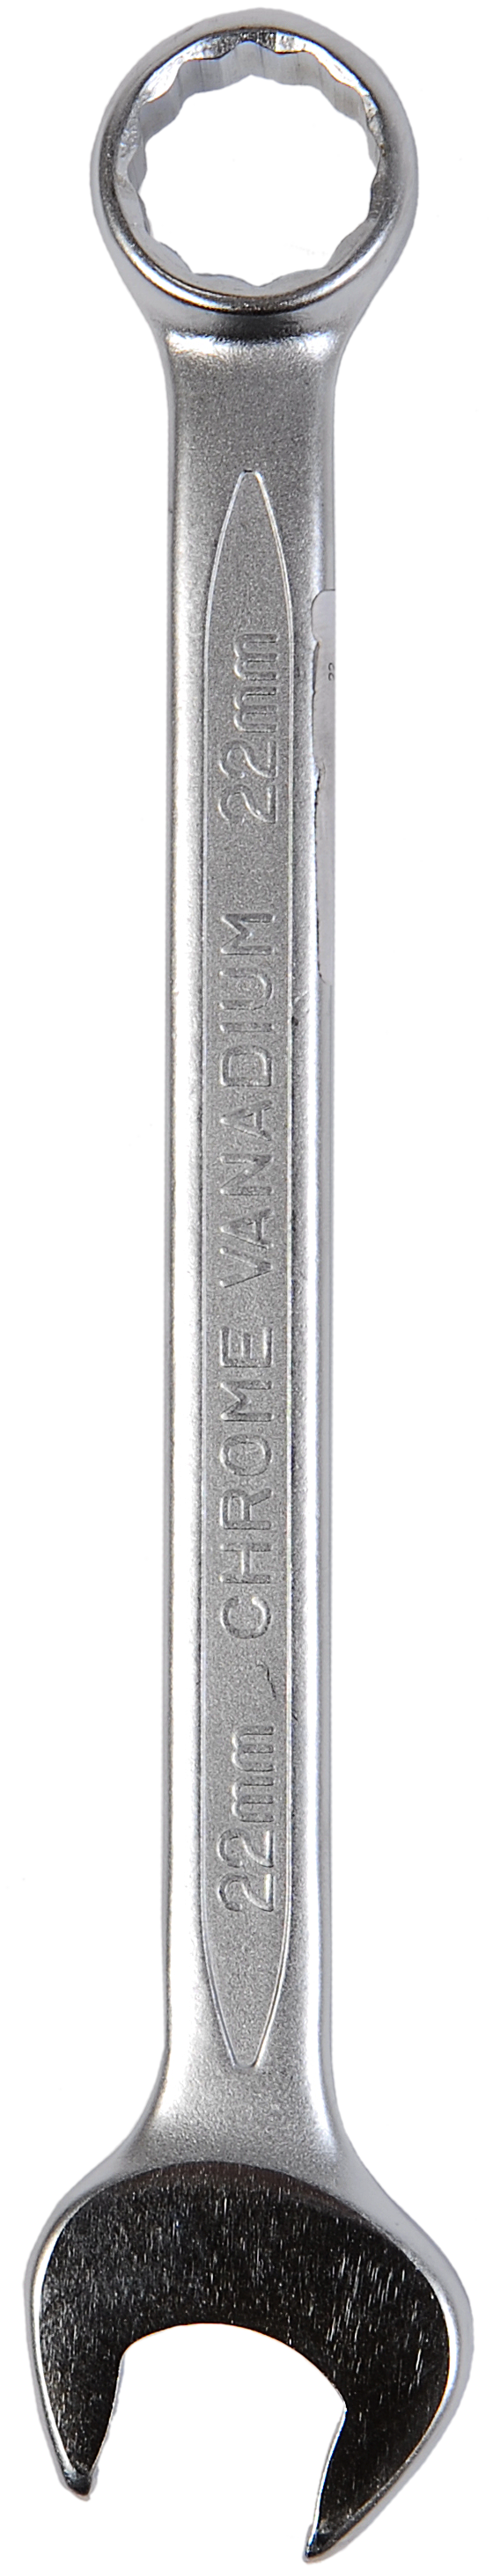 Stanley Slimline Combination Wrench 22mm